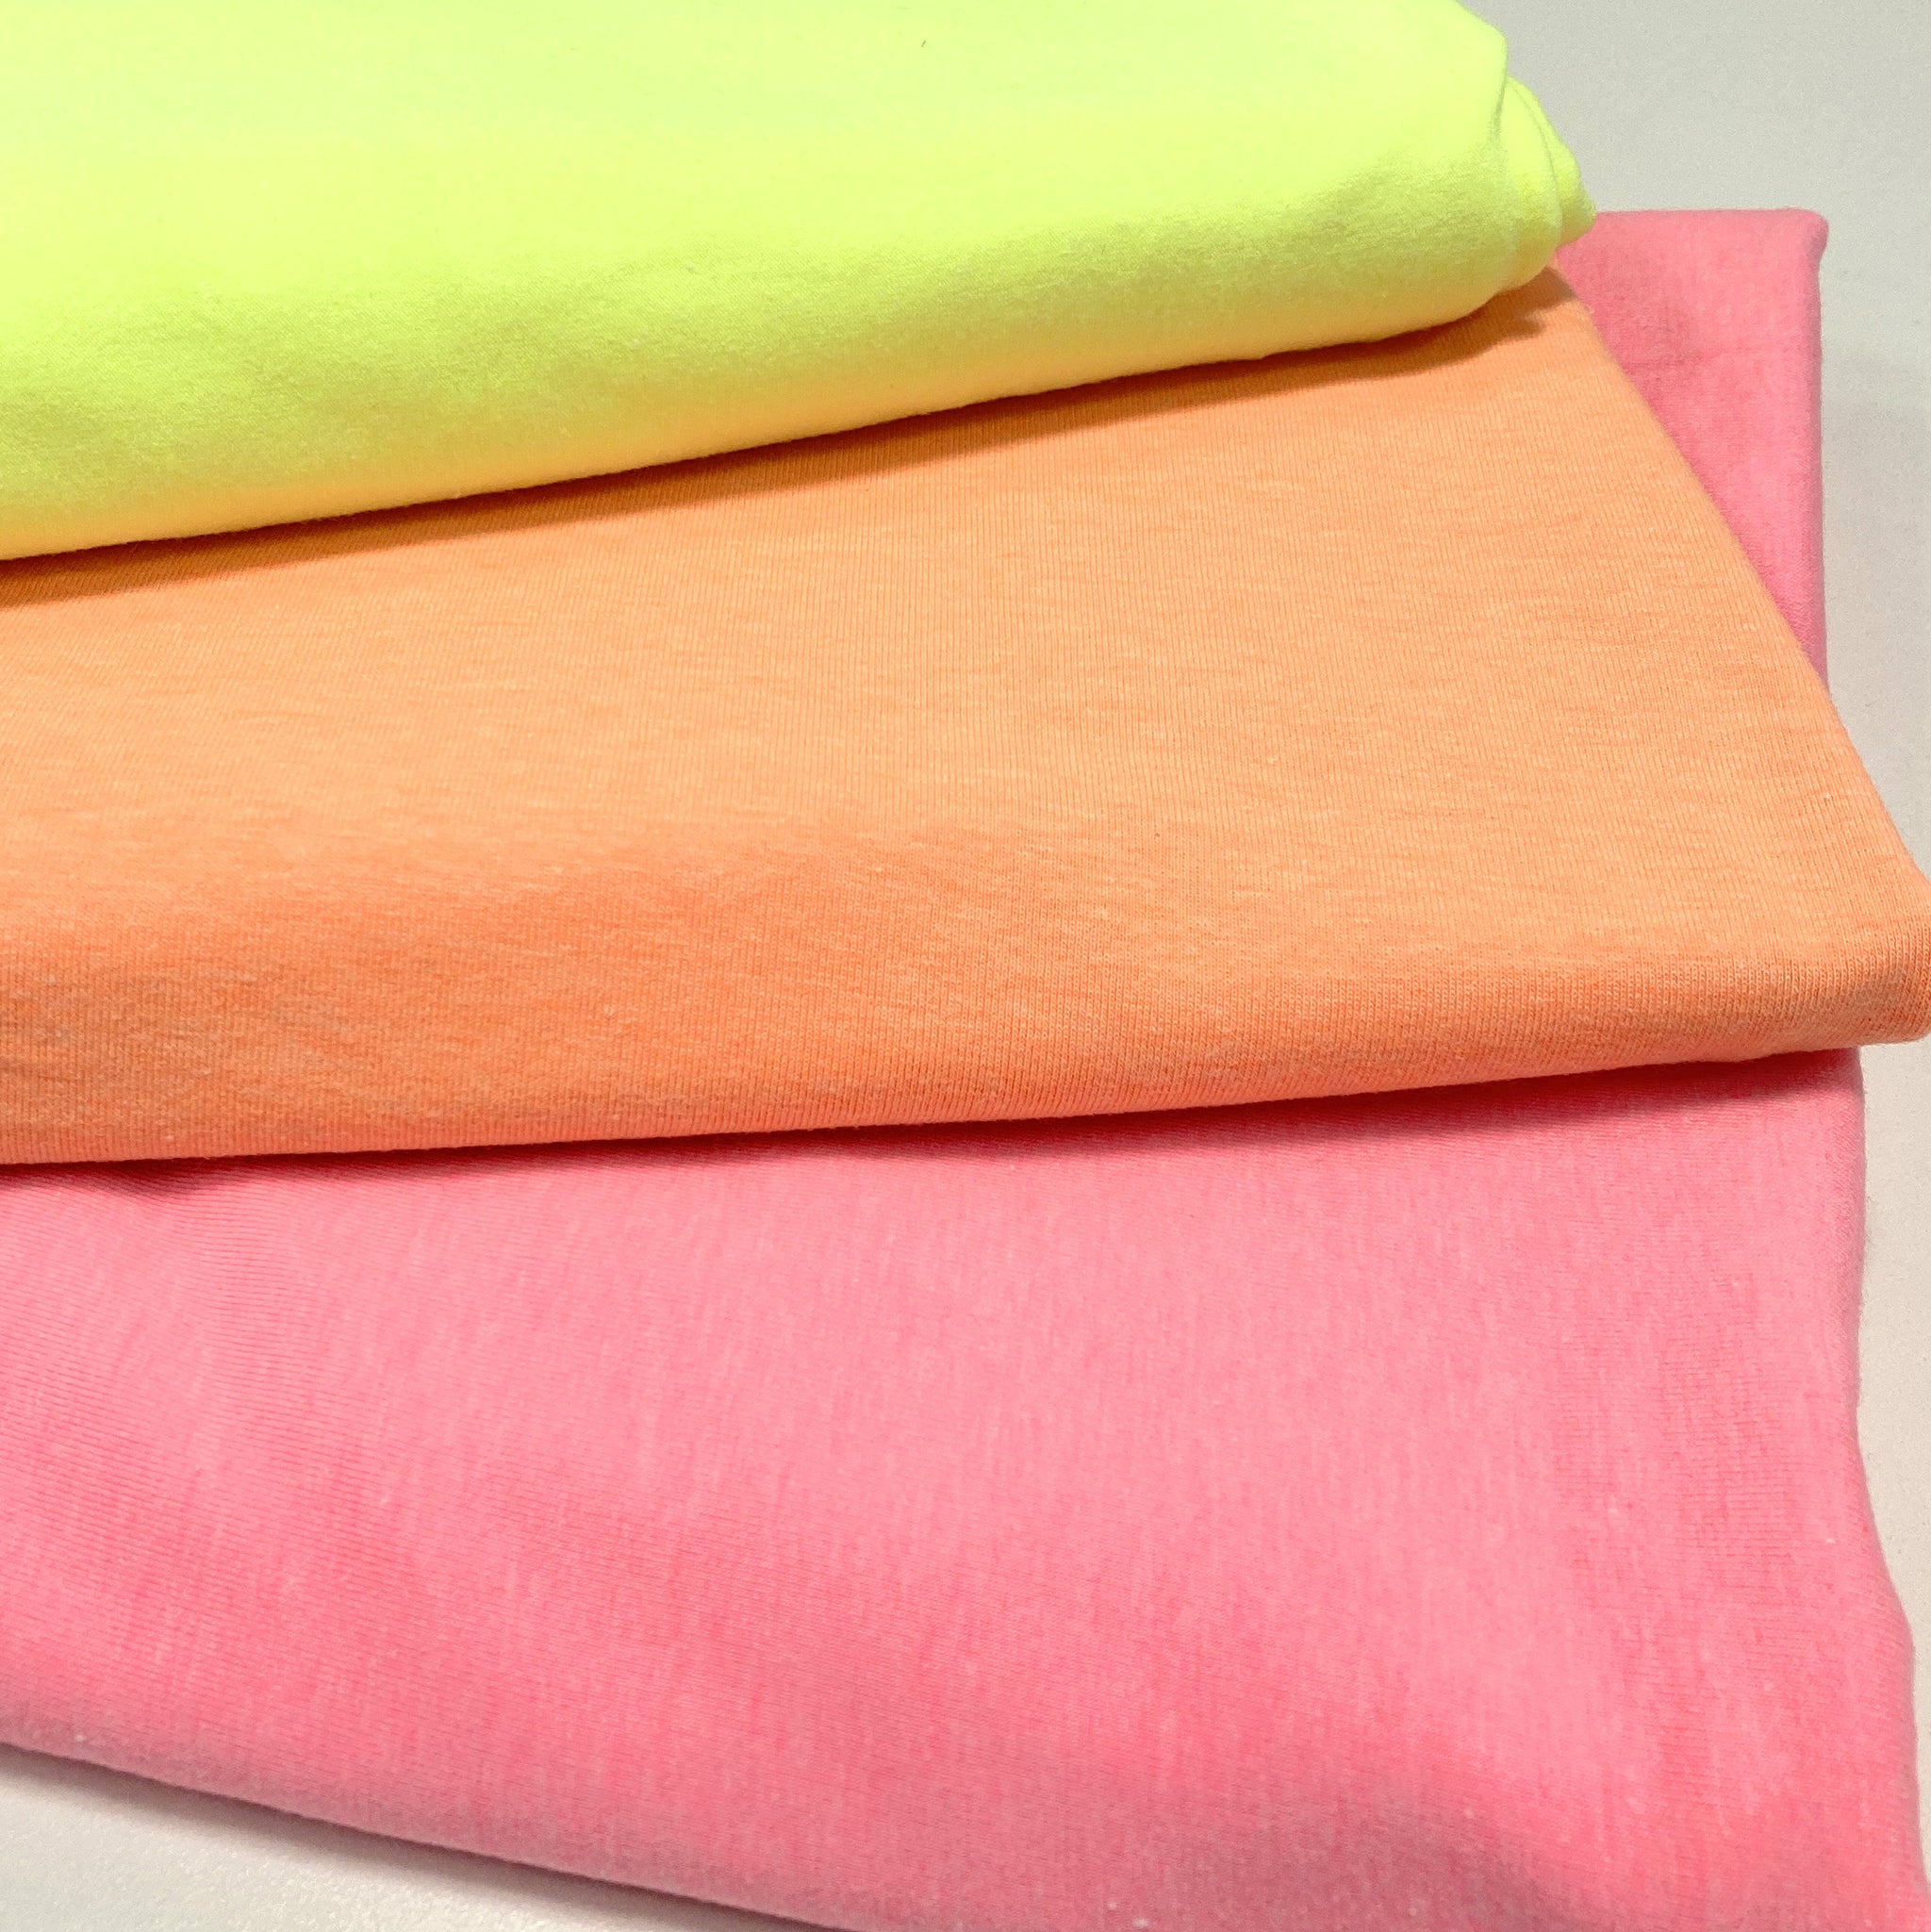 Cotton Elastane 4 Way Stretch Jersey Fabric